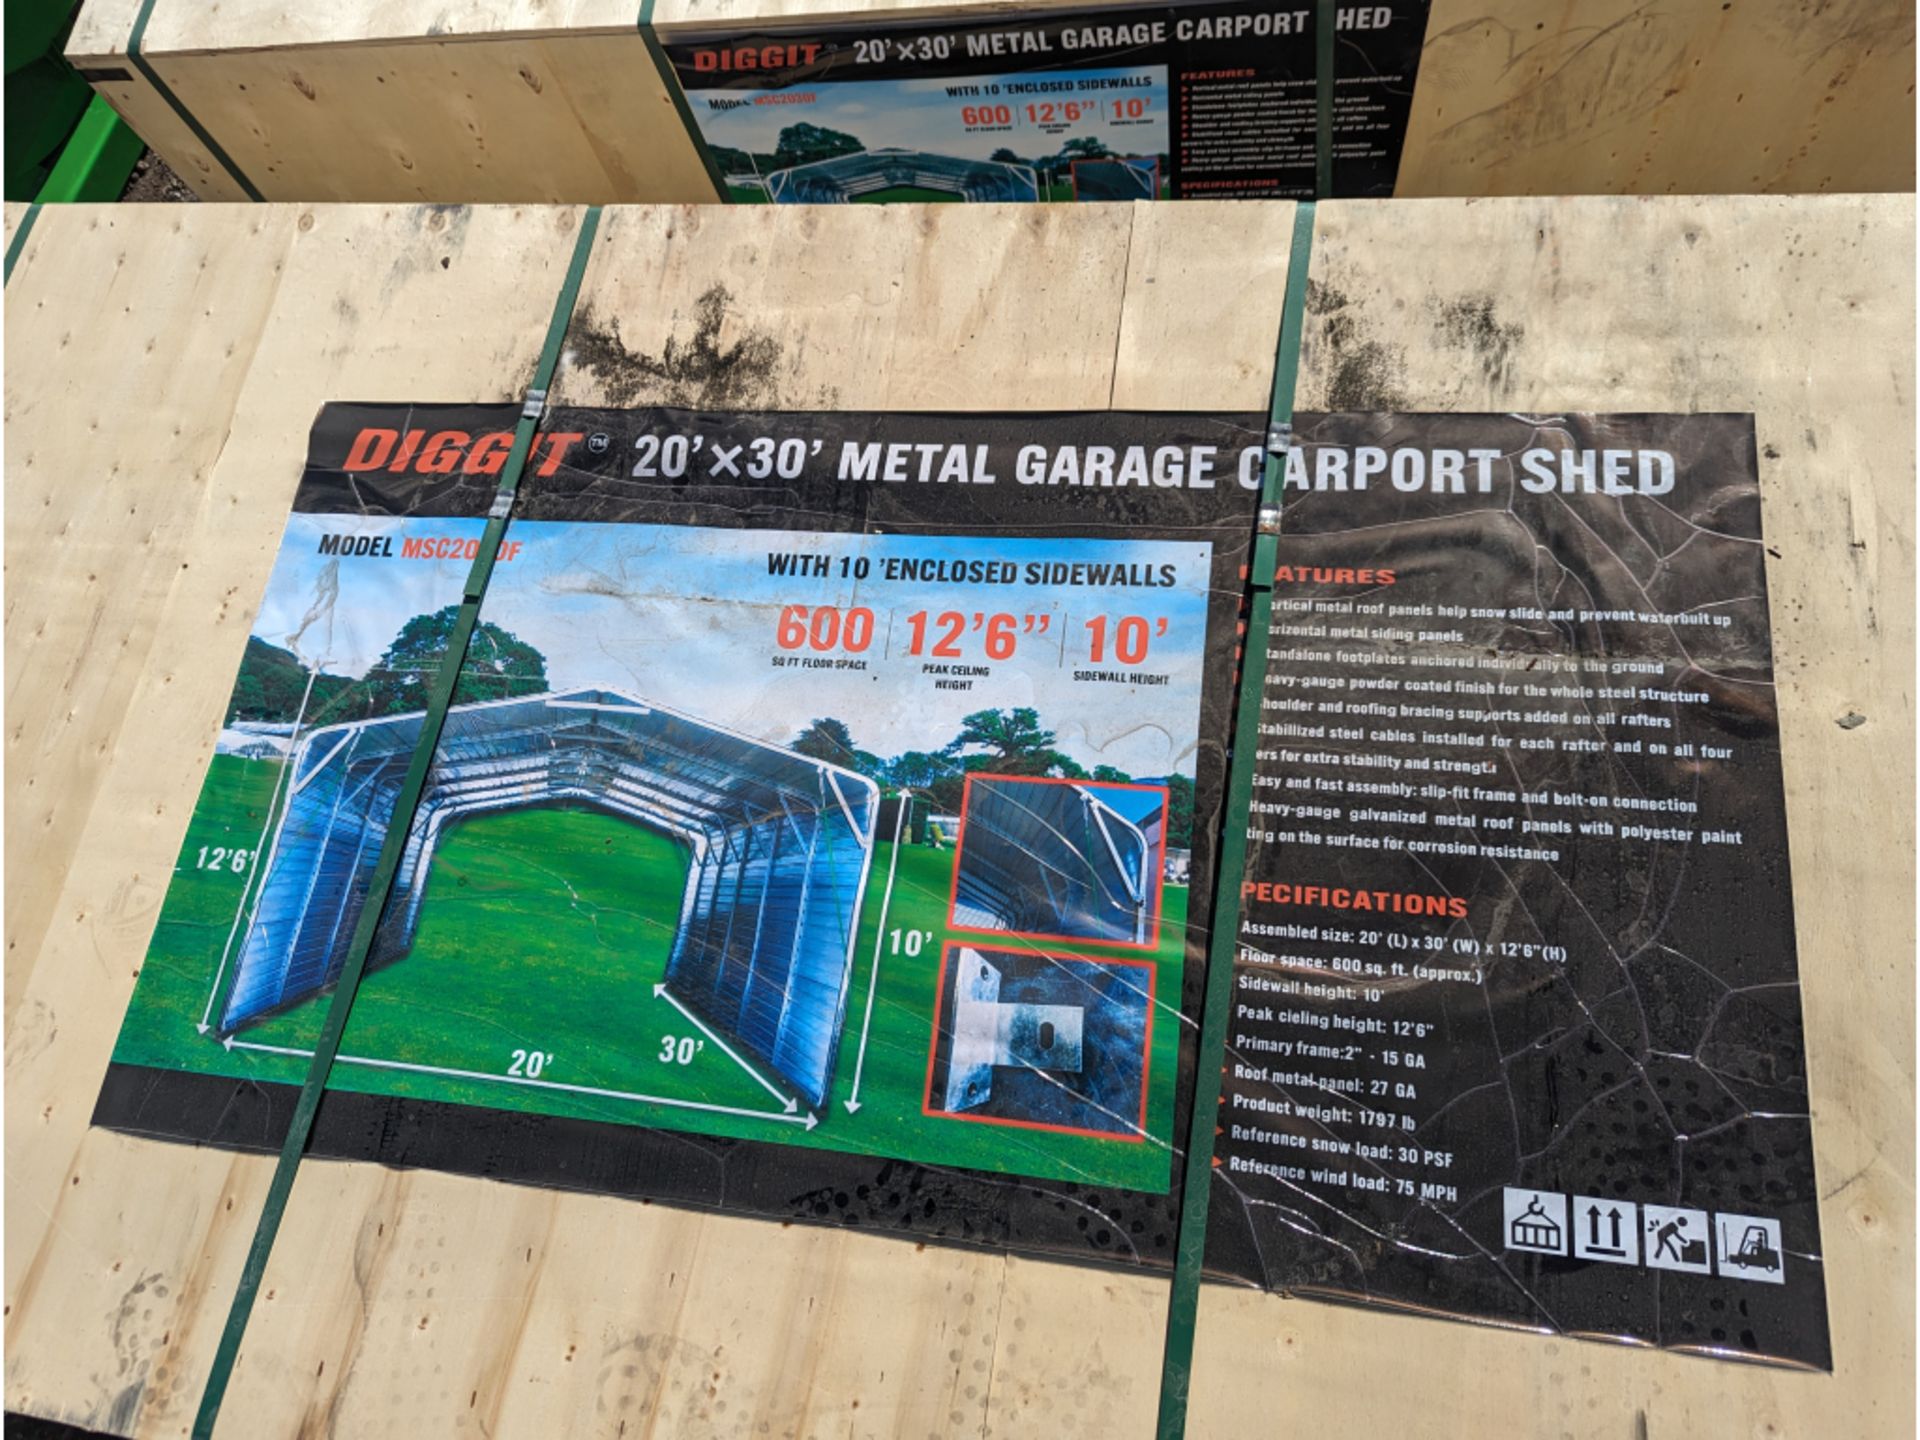 Diggit 20'x30' Metal Garage Carport Shed - Image 3 of 7